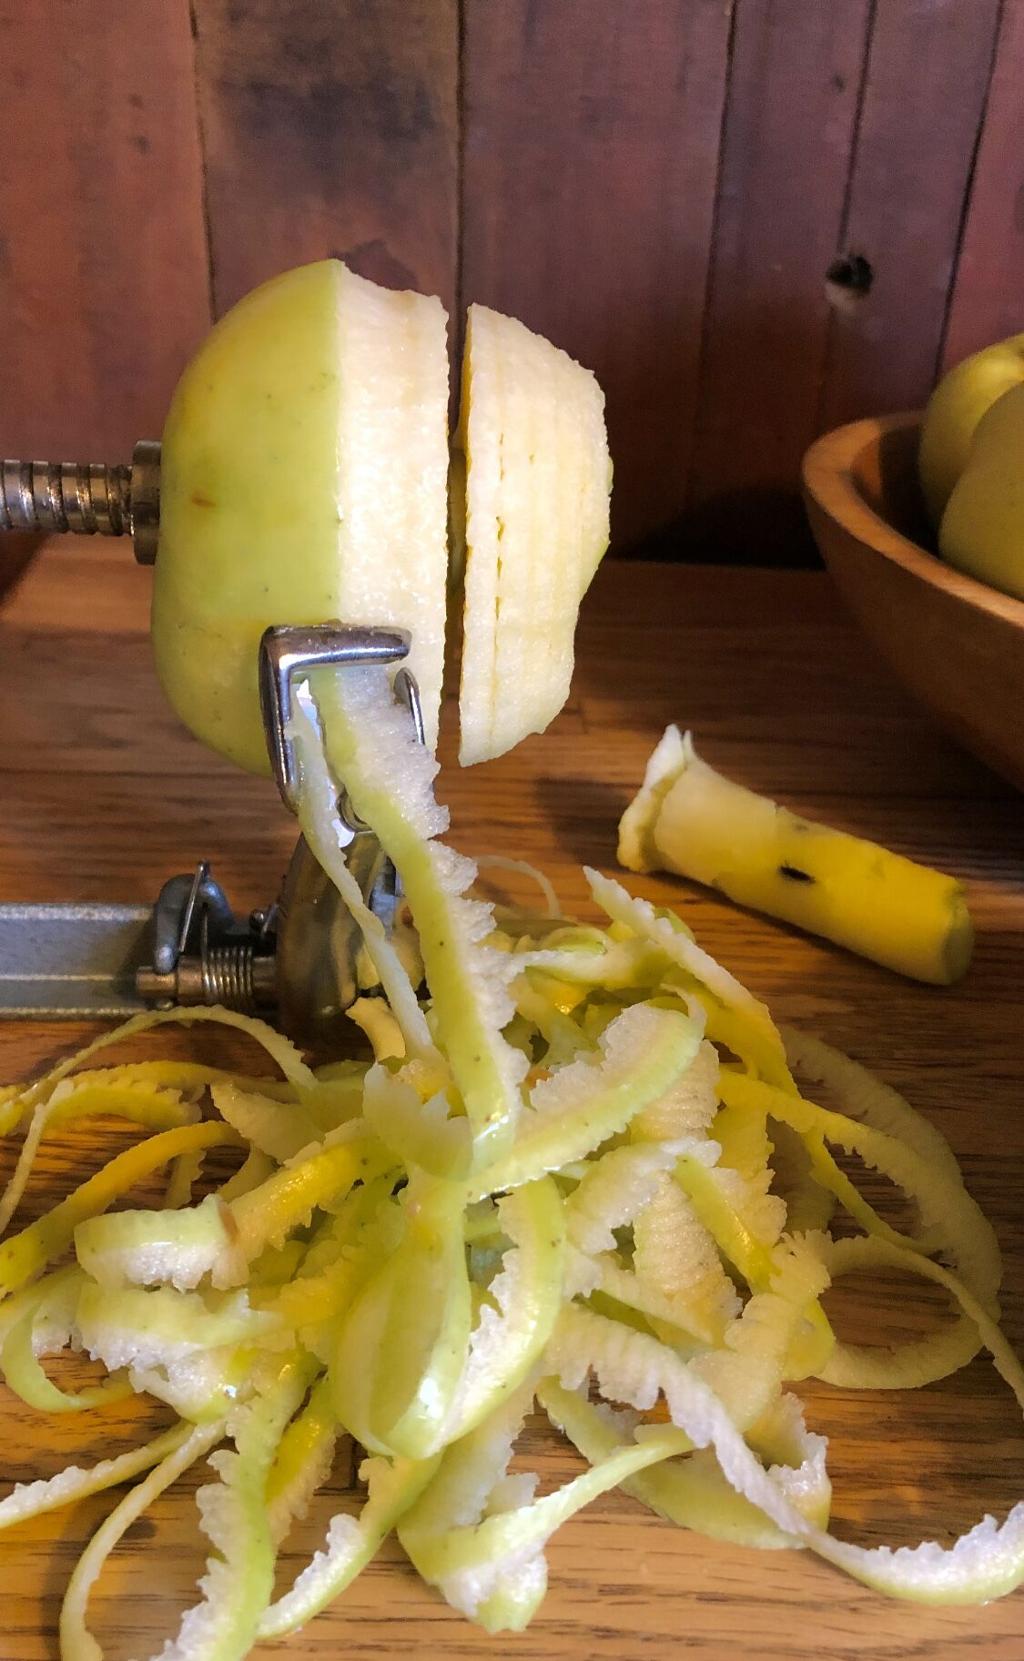 RSVP Apple Peeler, Slicer, and Corer - Austin, Texas — Faraday's Kitchen  Store